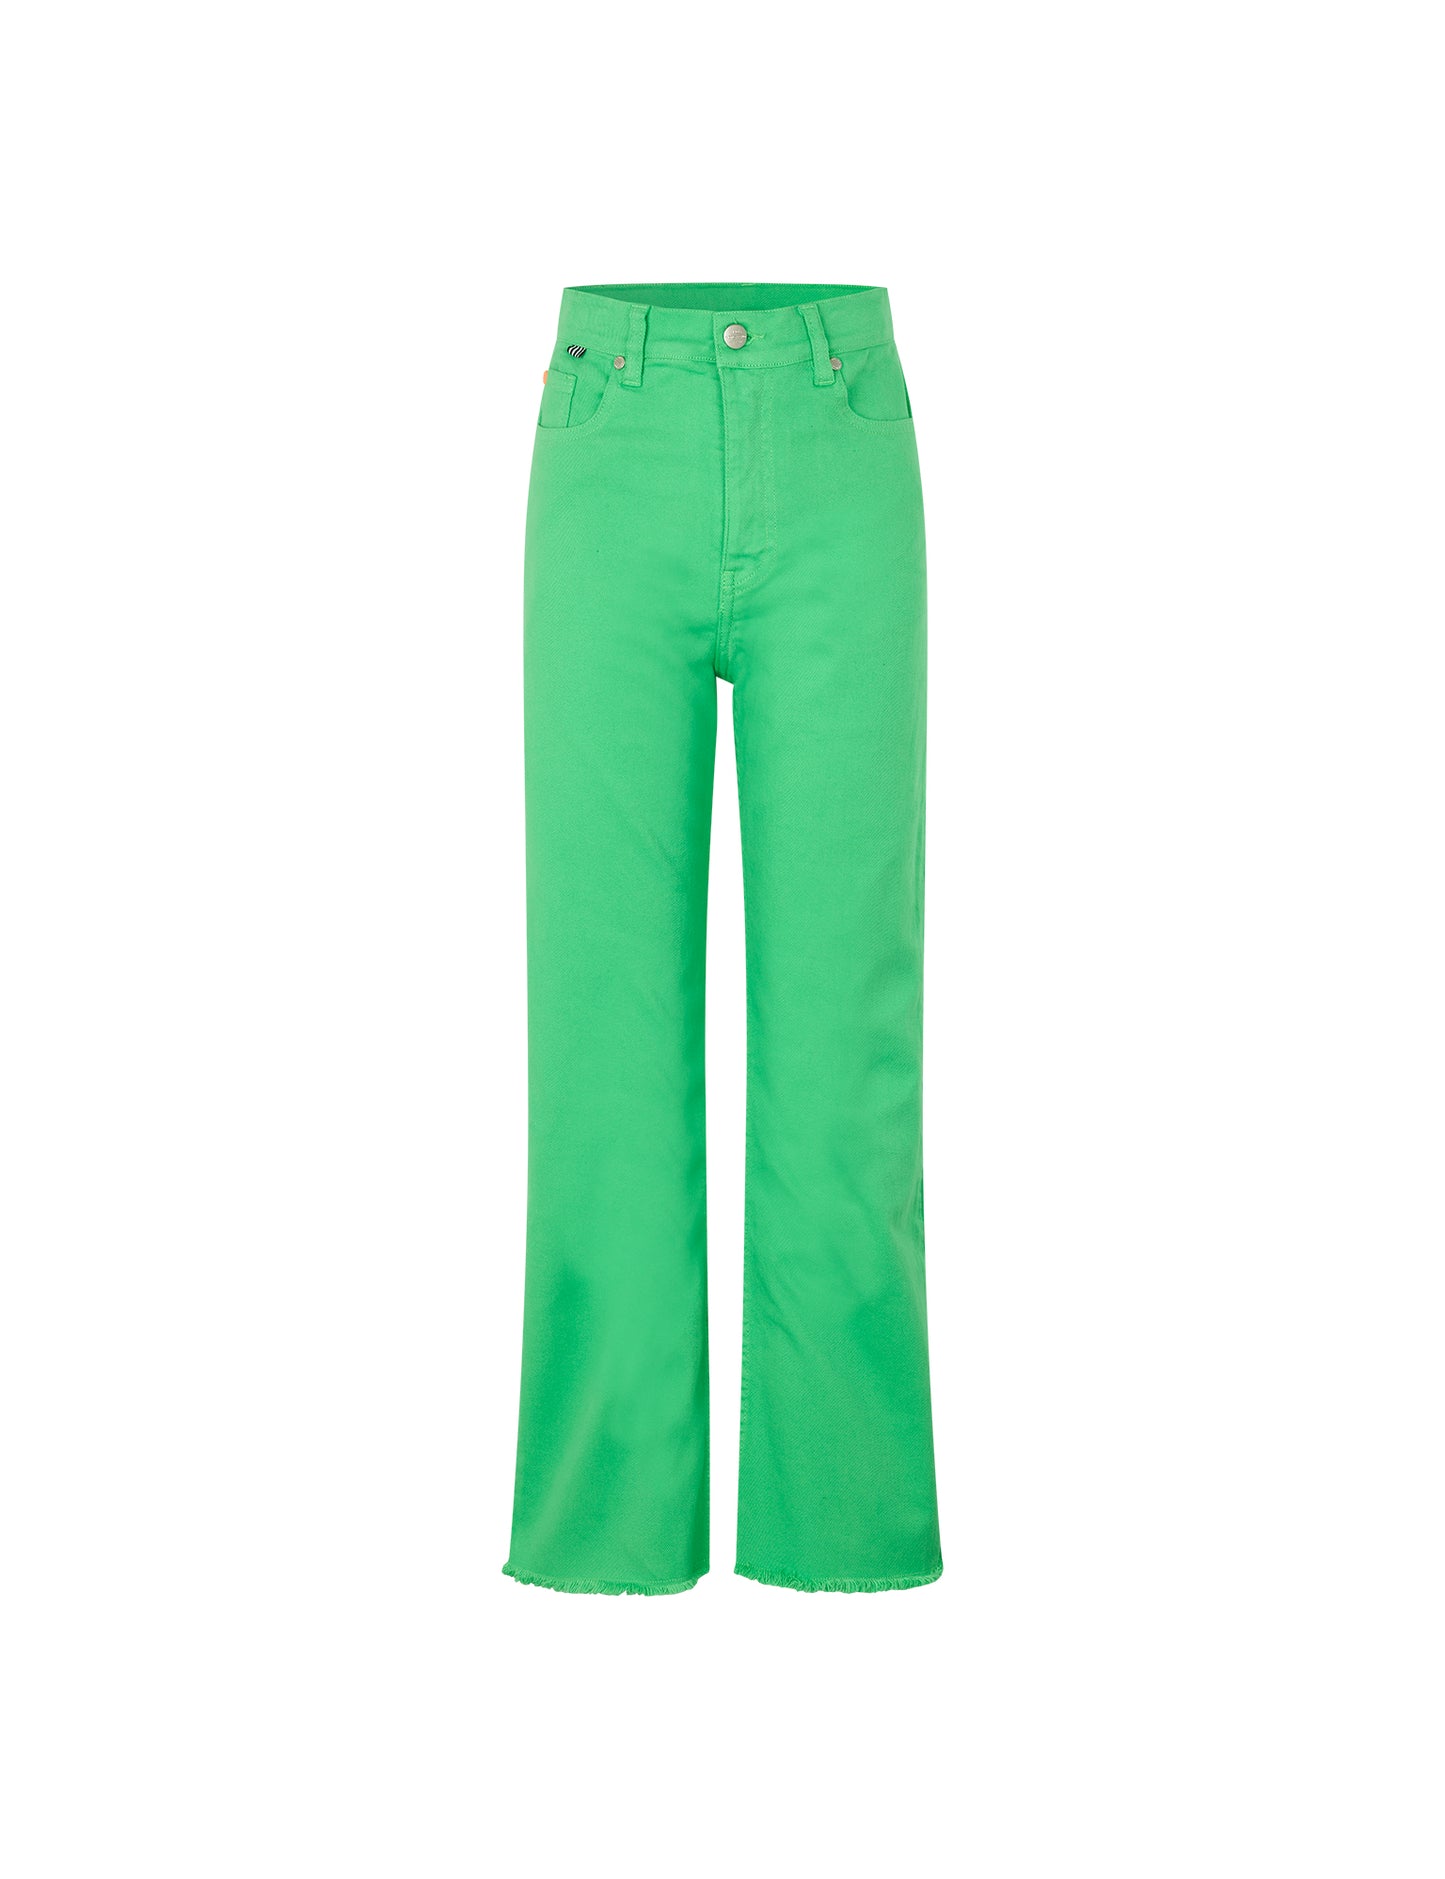 Coloured Denim Loozy Pants, Poison Green